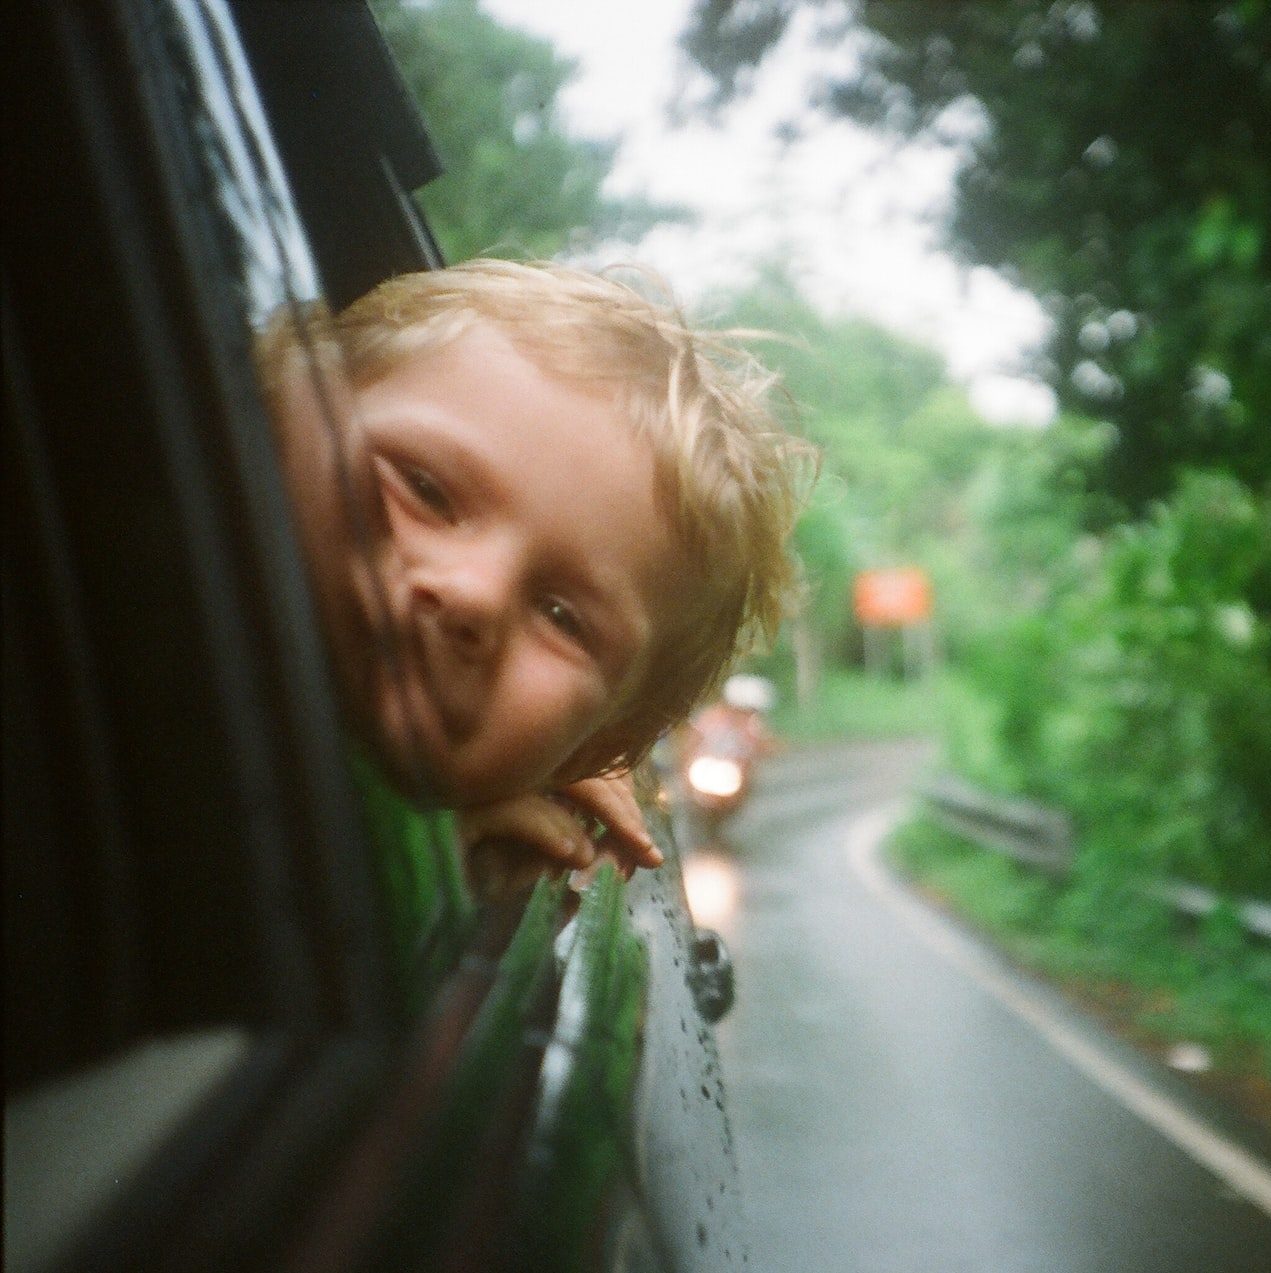 child peeking from vehicle window